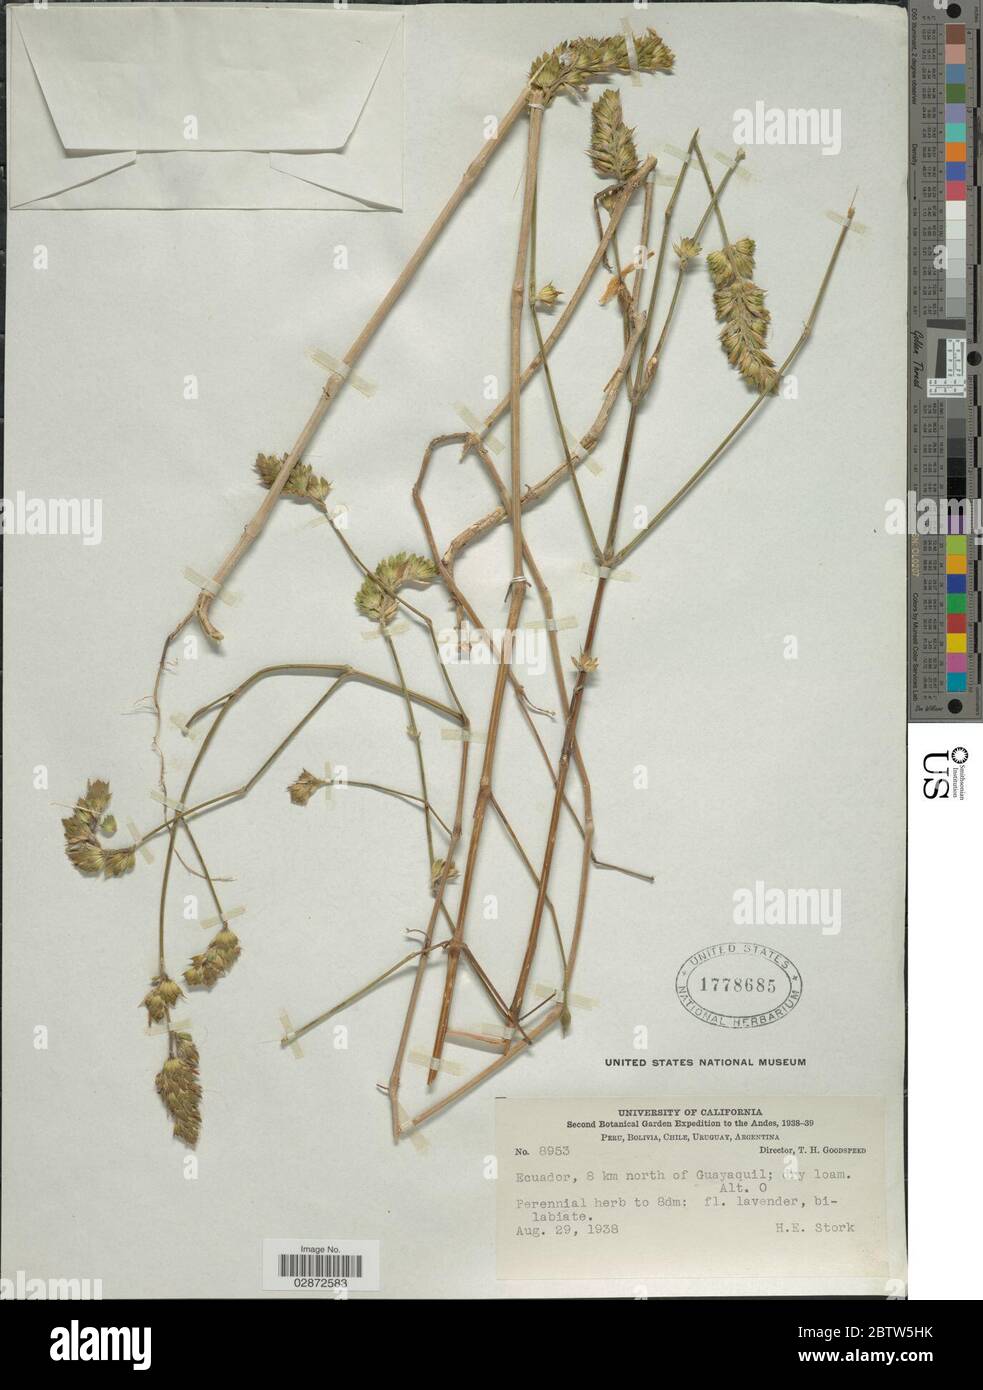 Dicliptera unguiculata Nees. Stock Photo